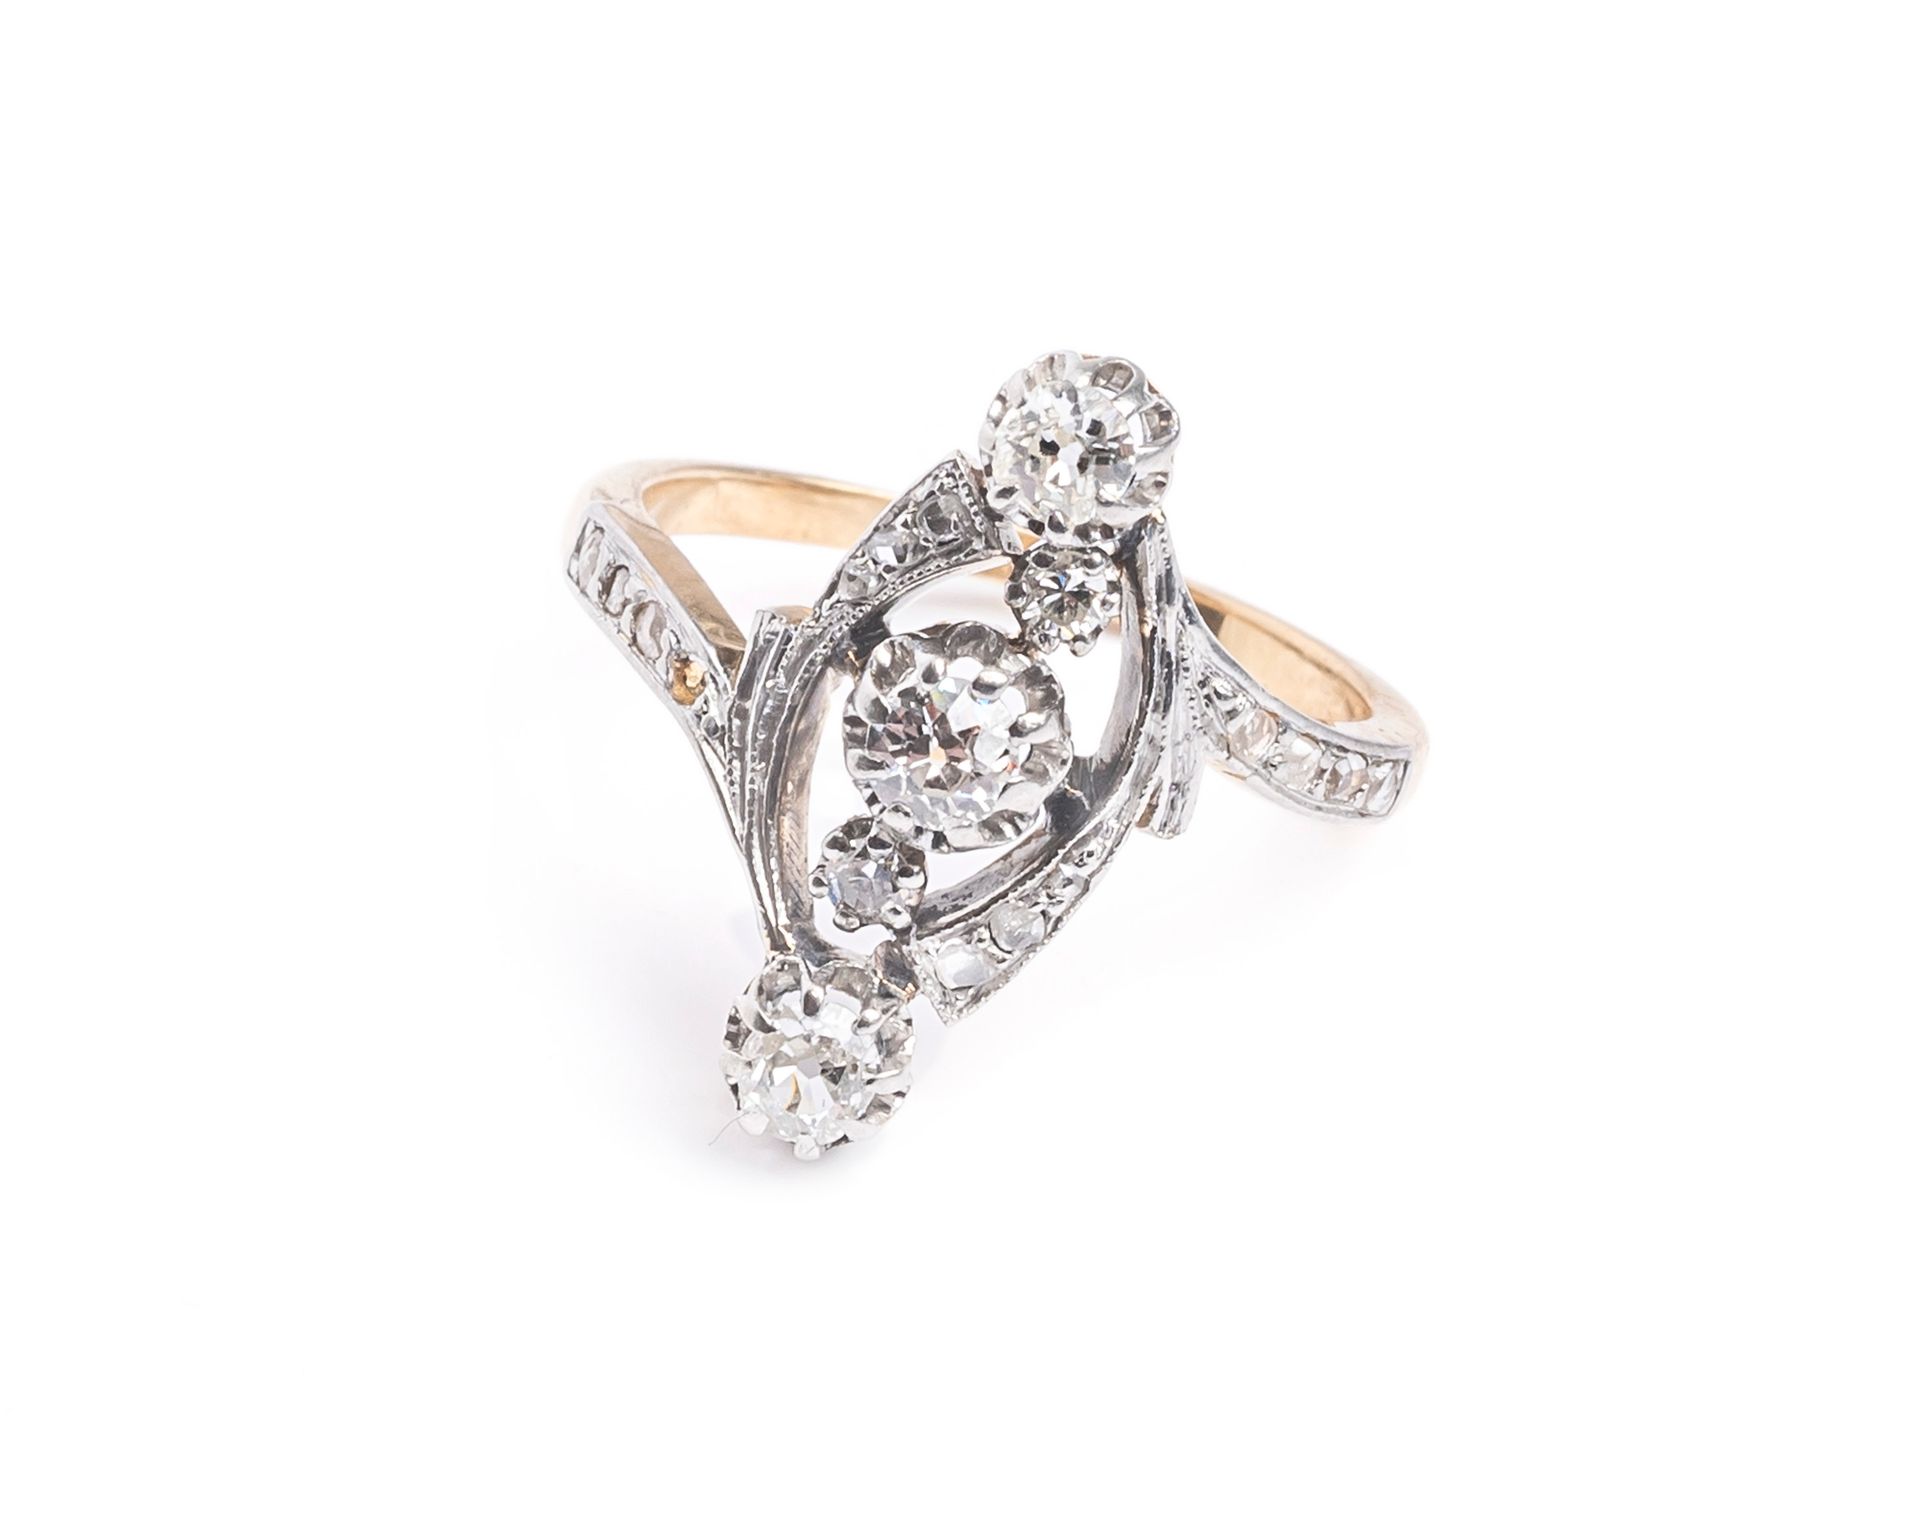 Null 公爵夫人戒指，双色18K（750千分之一）金，镂空镶嵌，主钻为圆形老式切割钻石，其他为玫瑰切割钻石。
小缺
手指尺寸：51
毛重：3.7克。